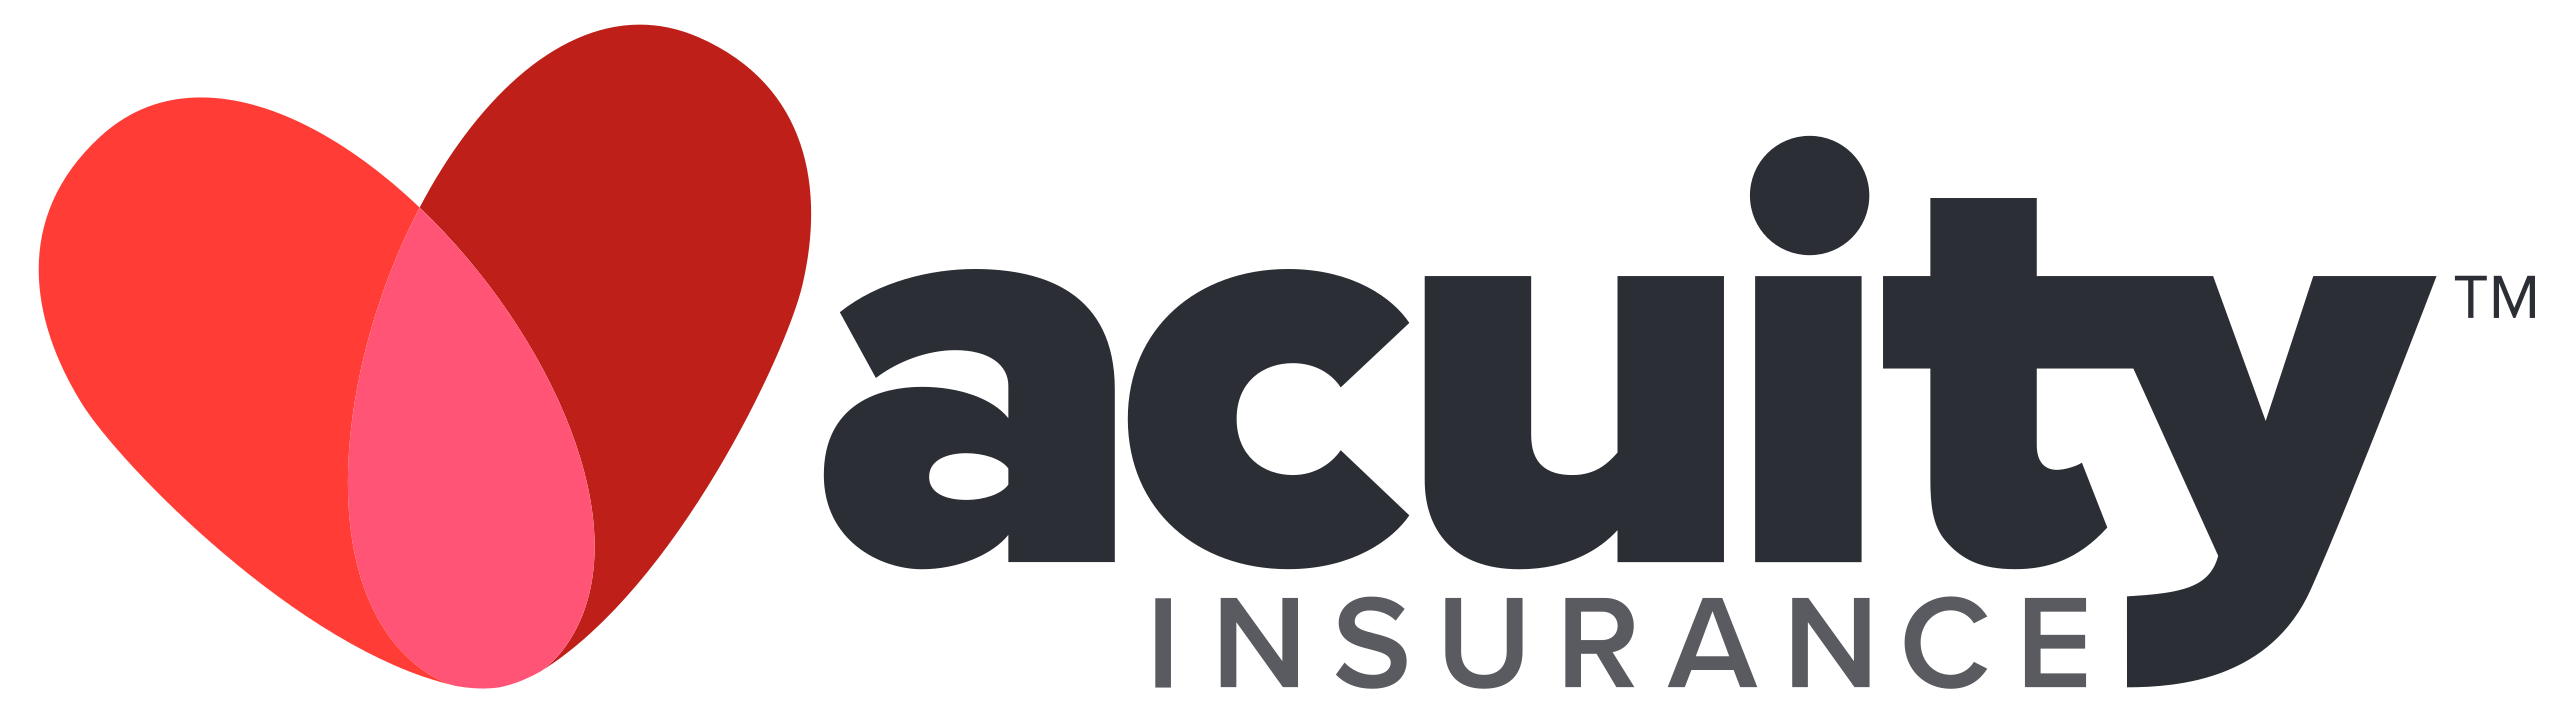 Acuity_Insurance_logo